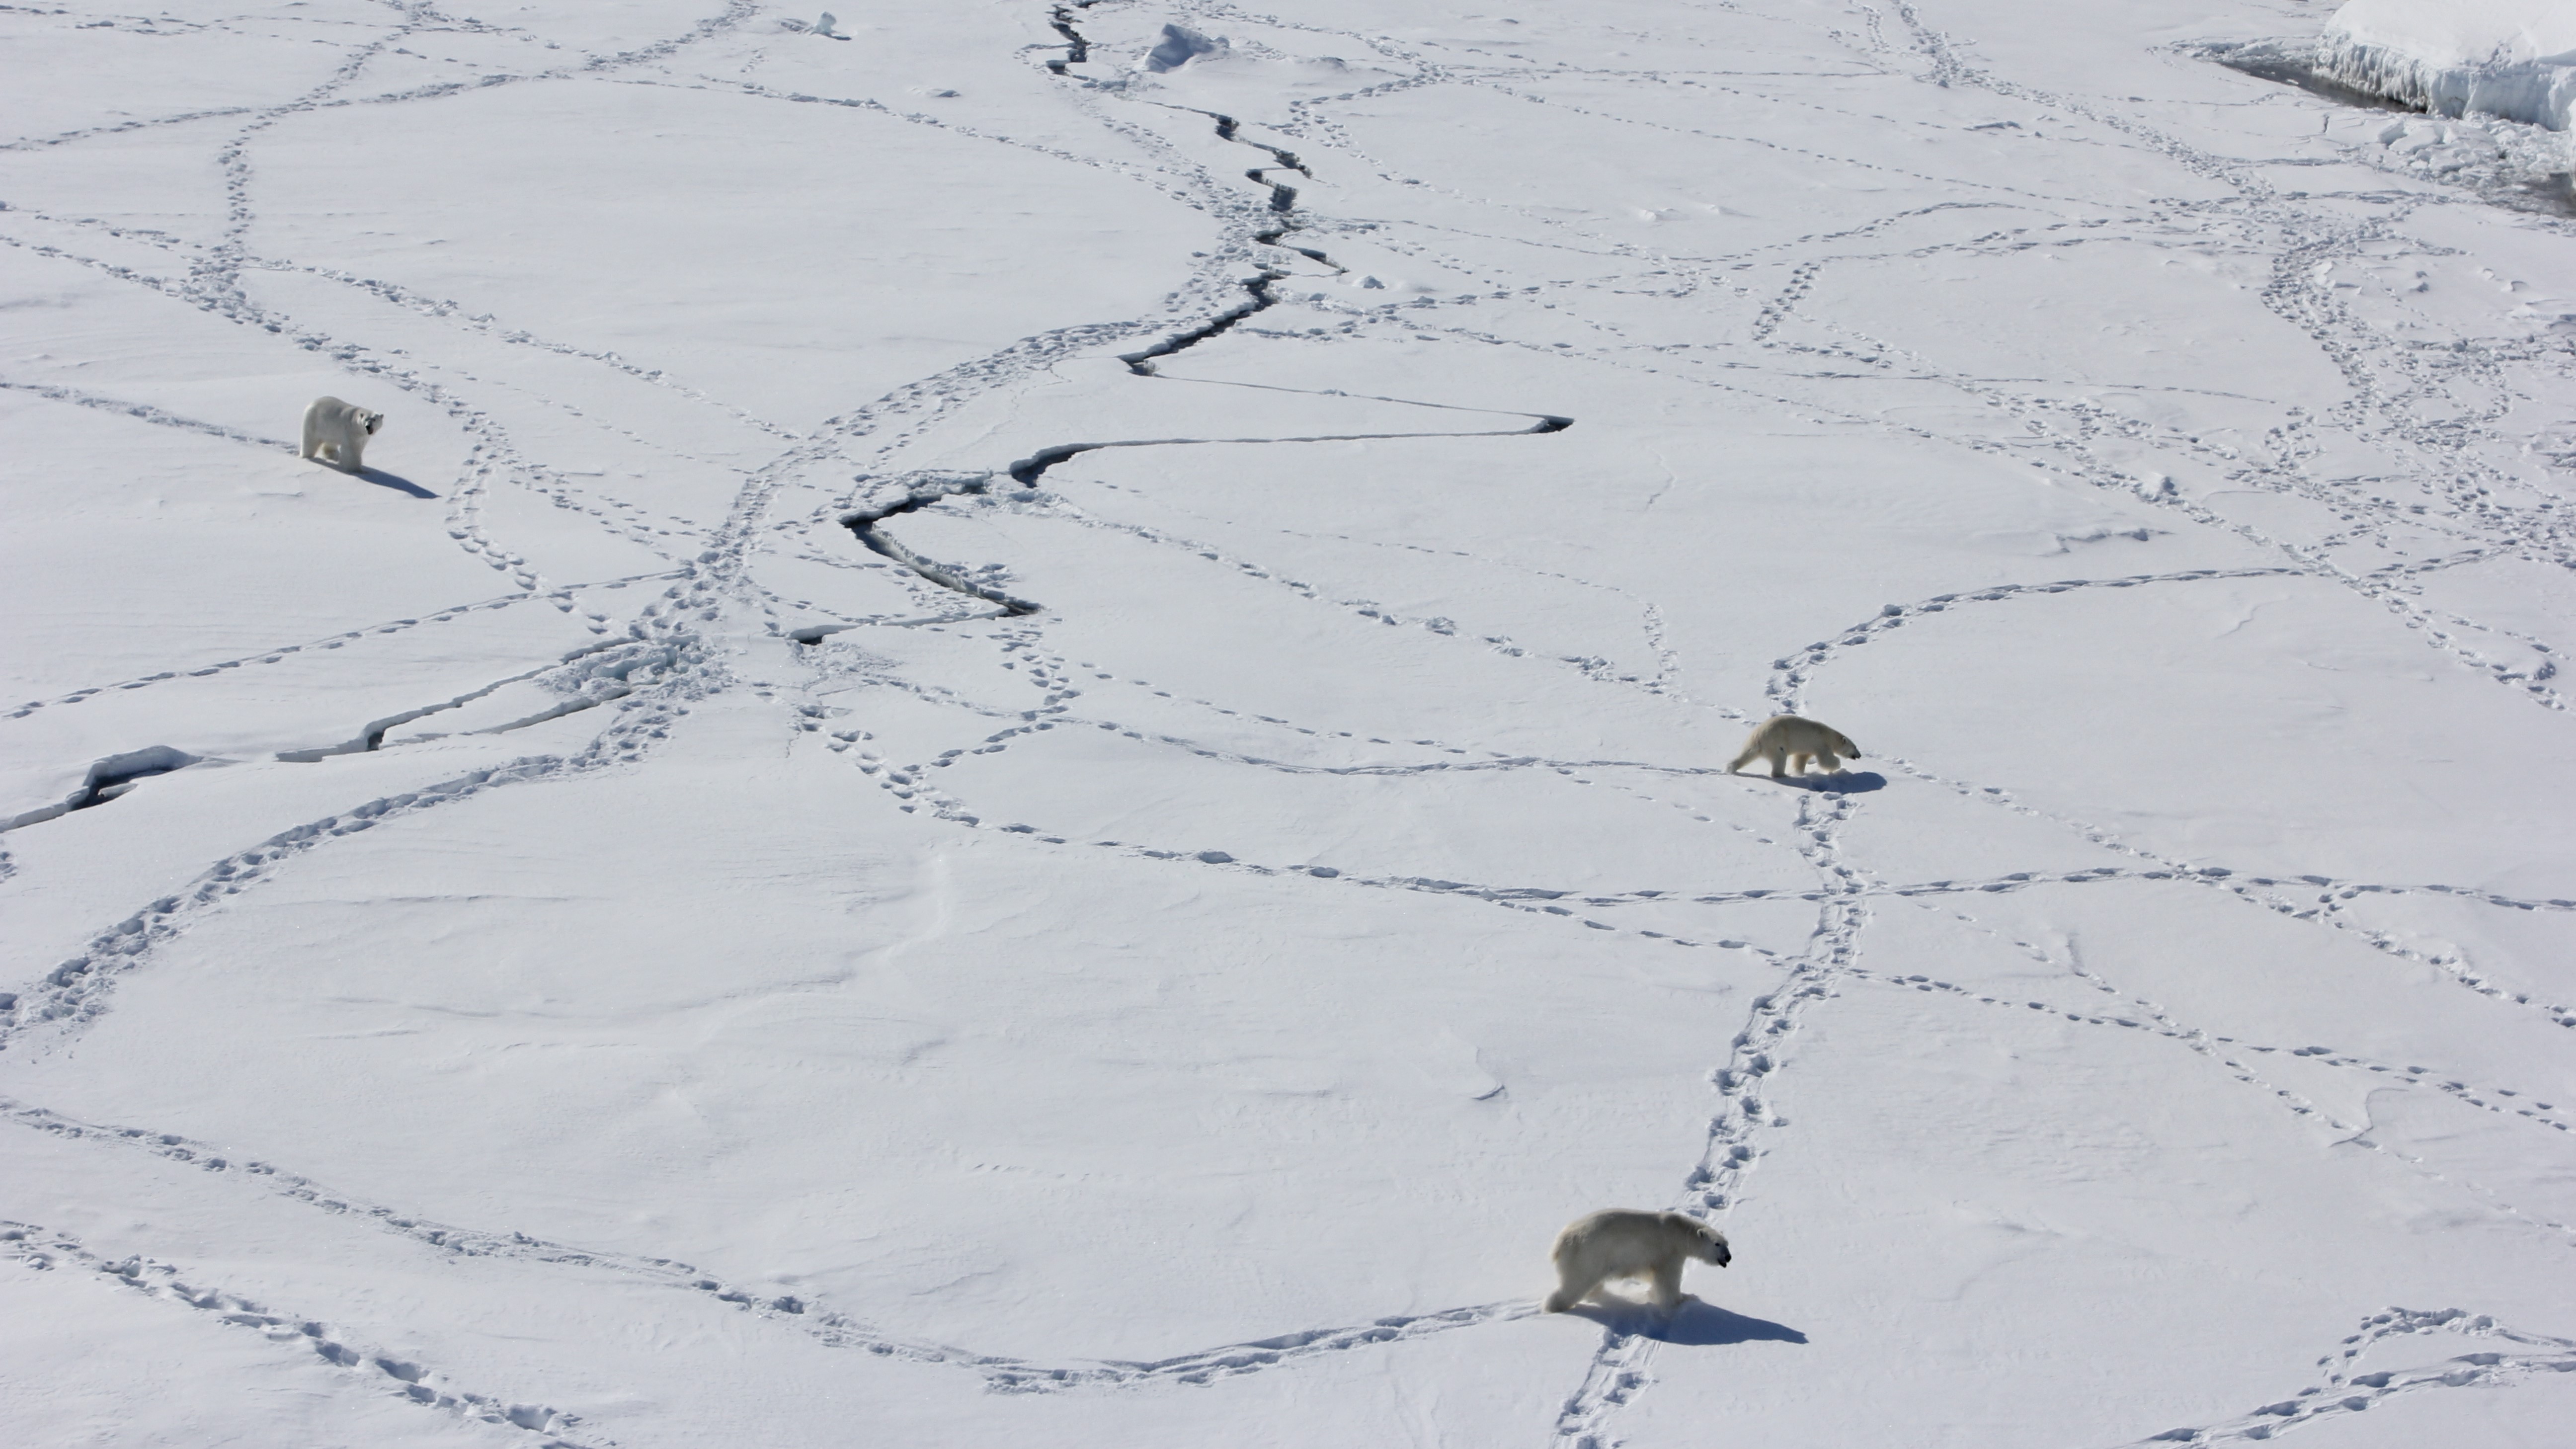 Polar bears moving through the snow.